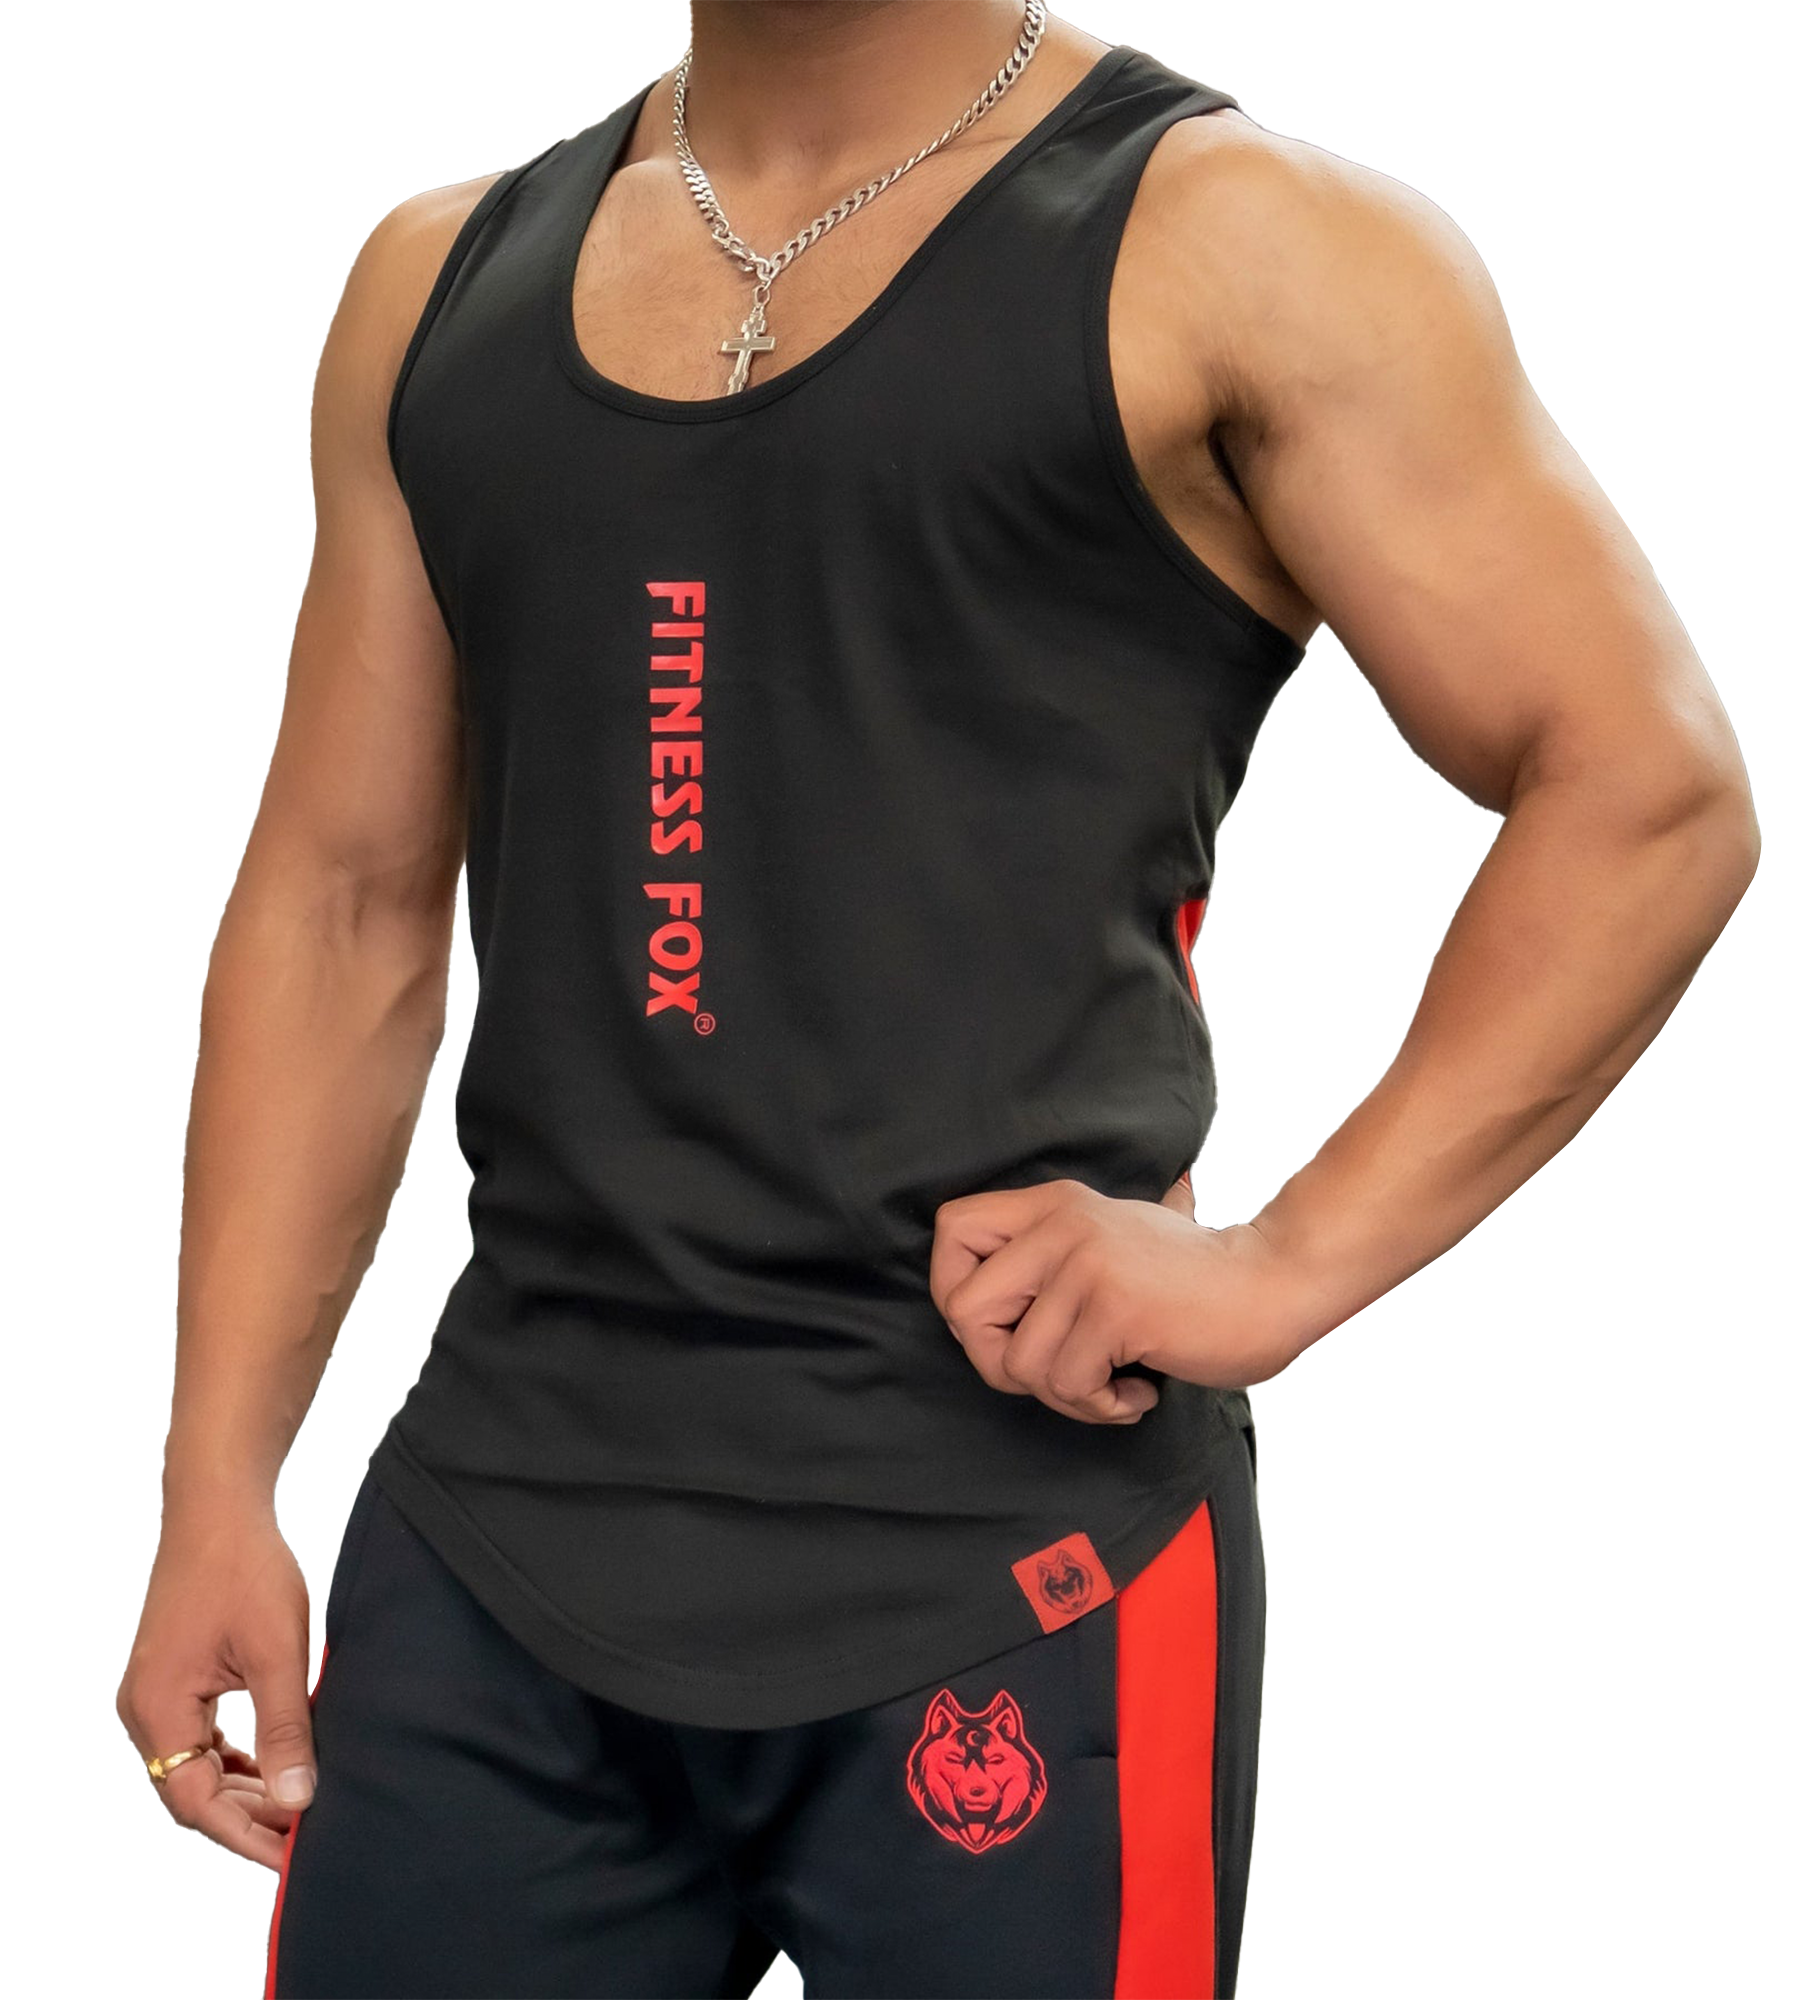 Fitnessfox Black-Red Gym Training Singlets